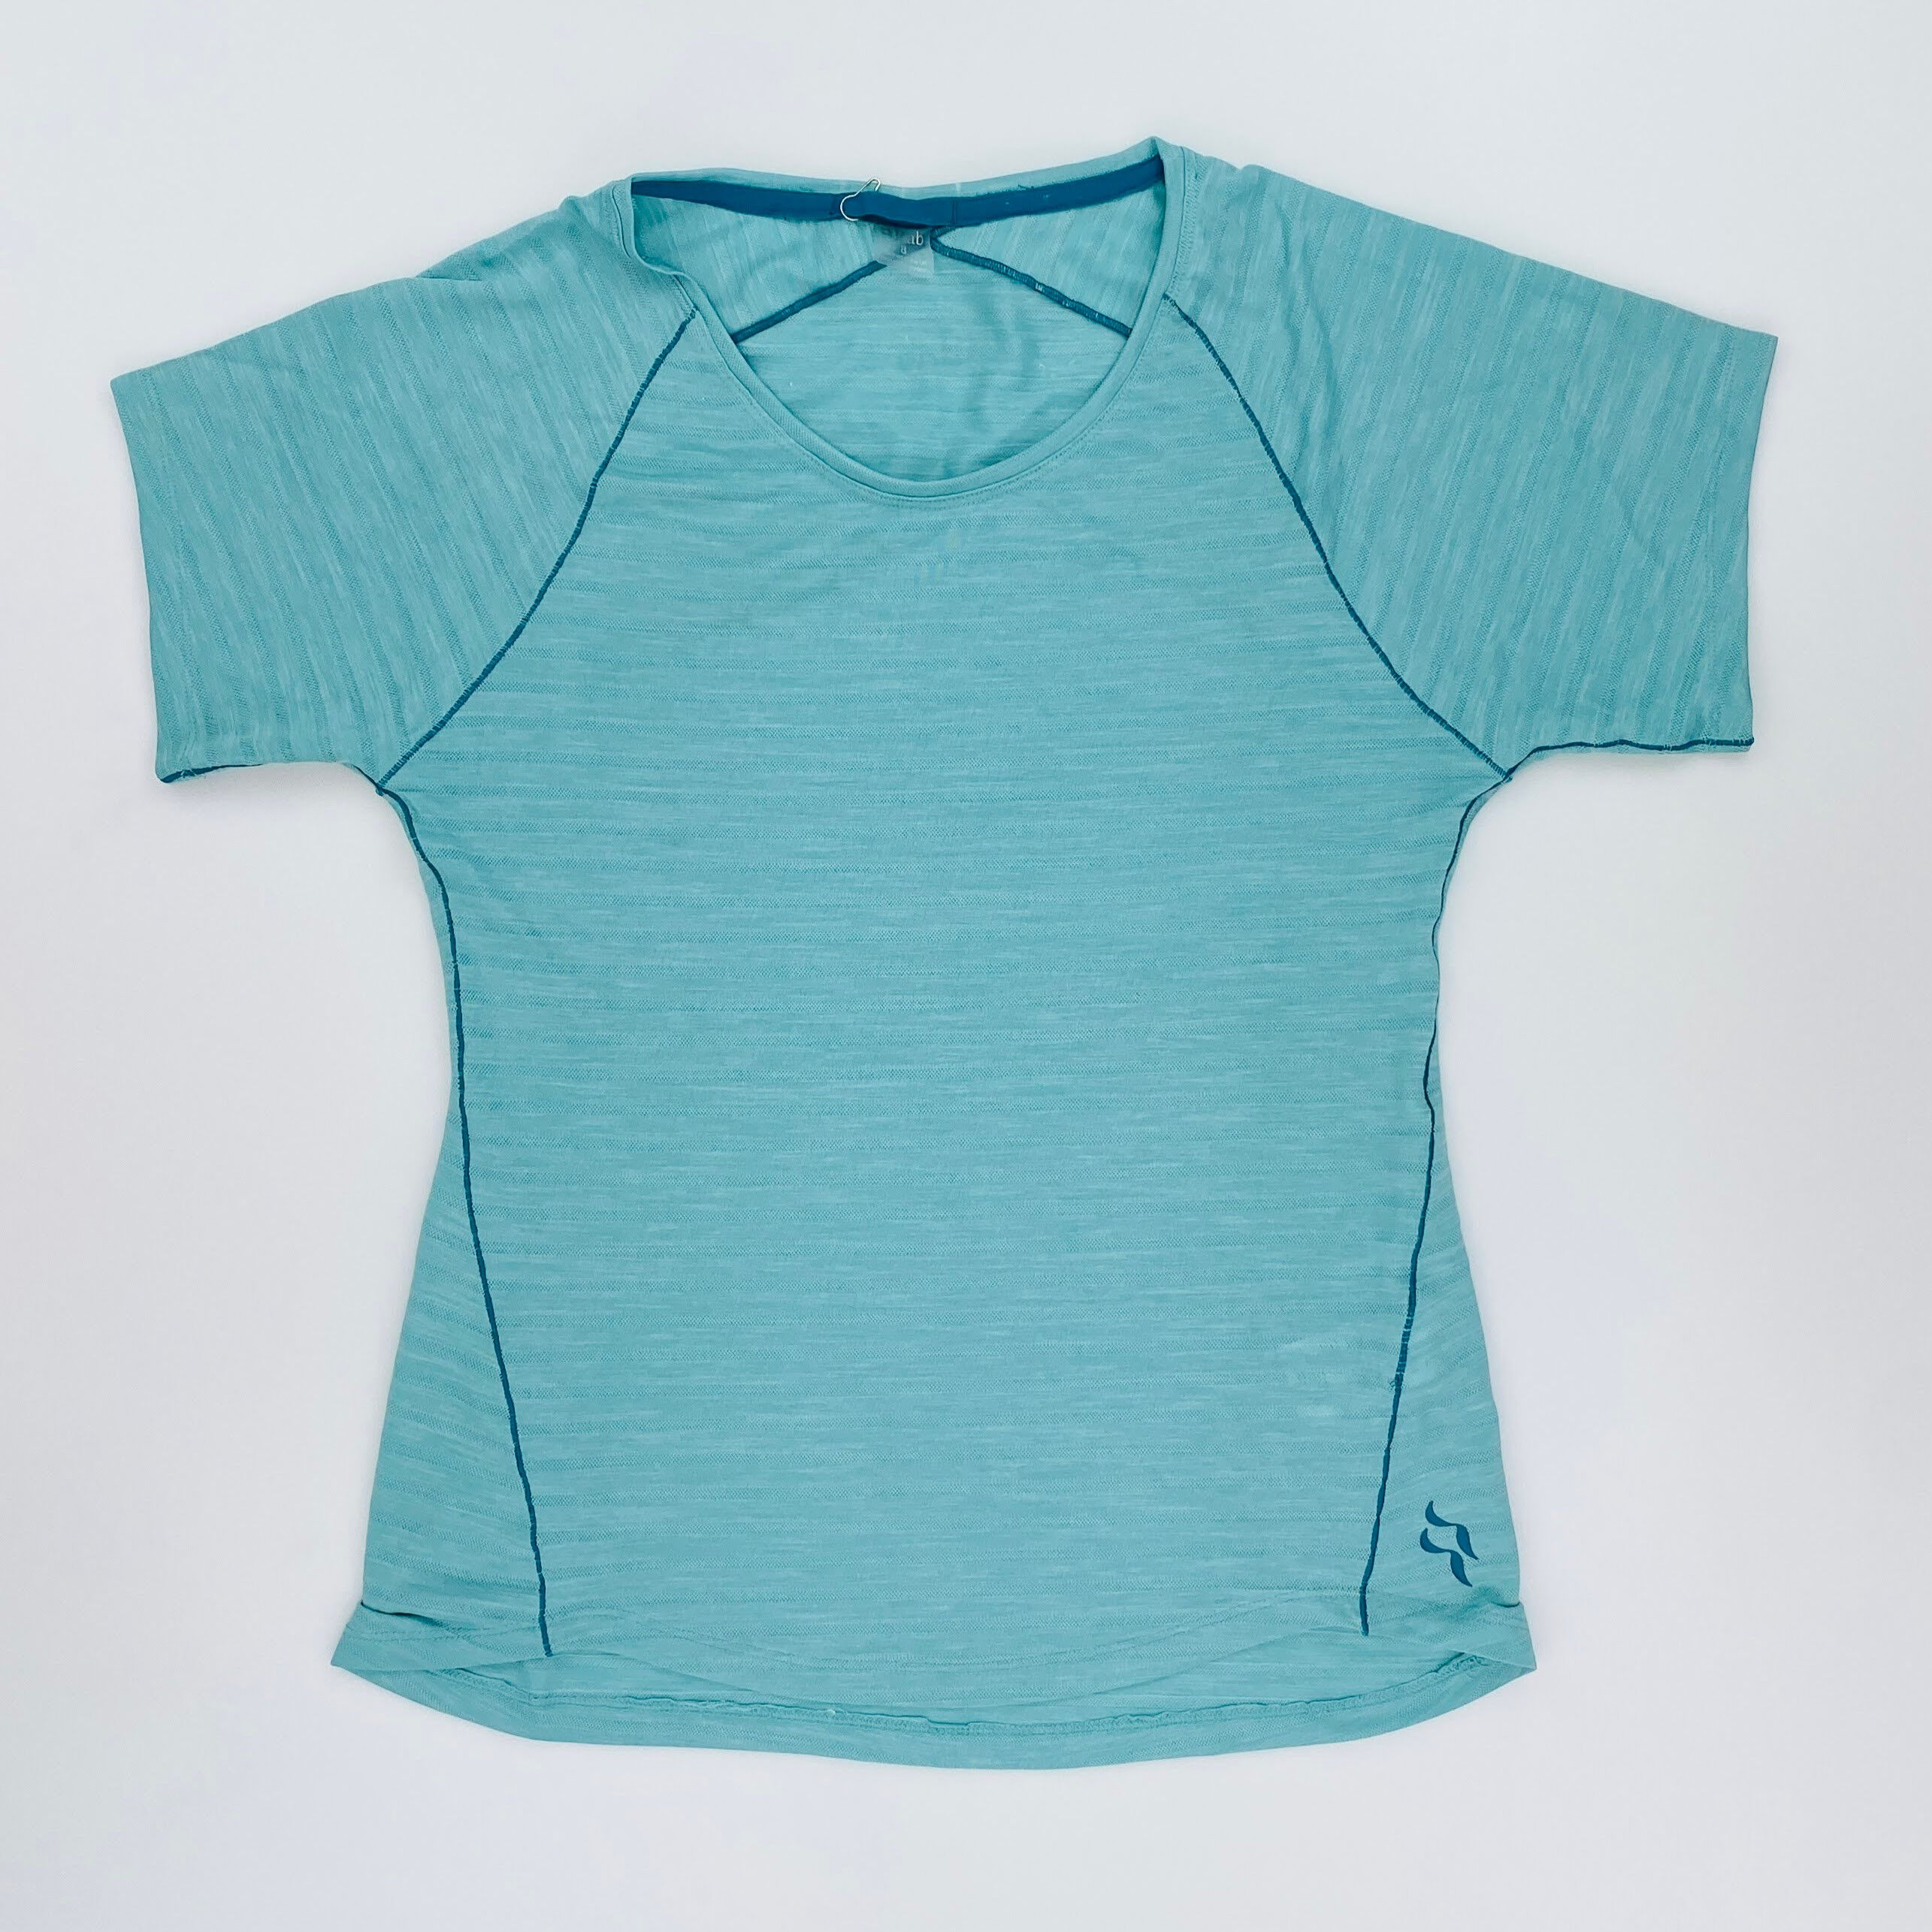 Rab Wisp Tee - T-shirt di seconda mano - Donna - Verde - XS | Hardloop